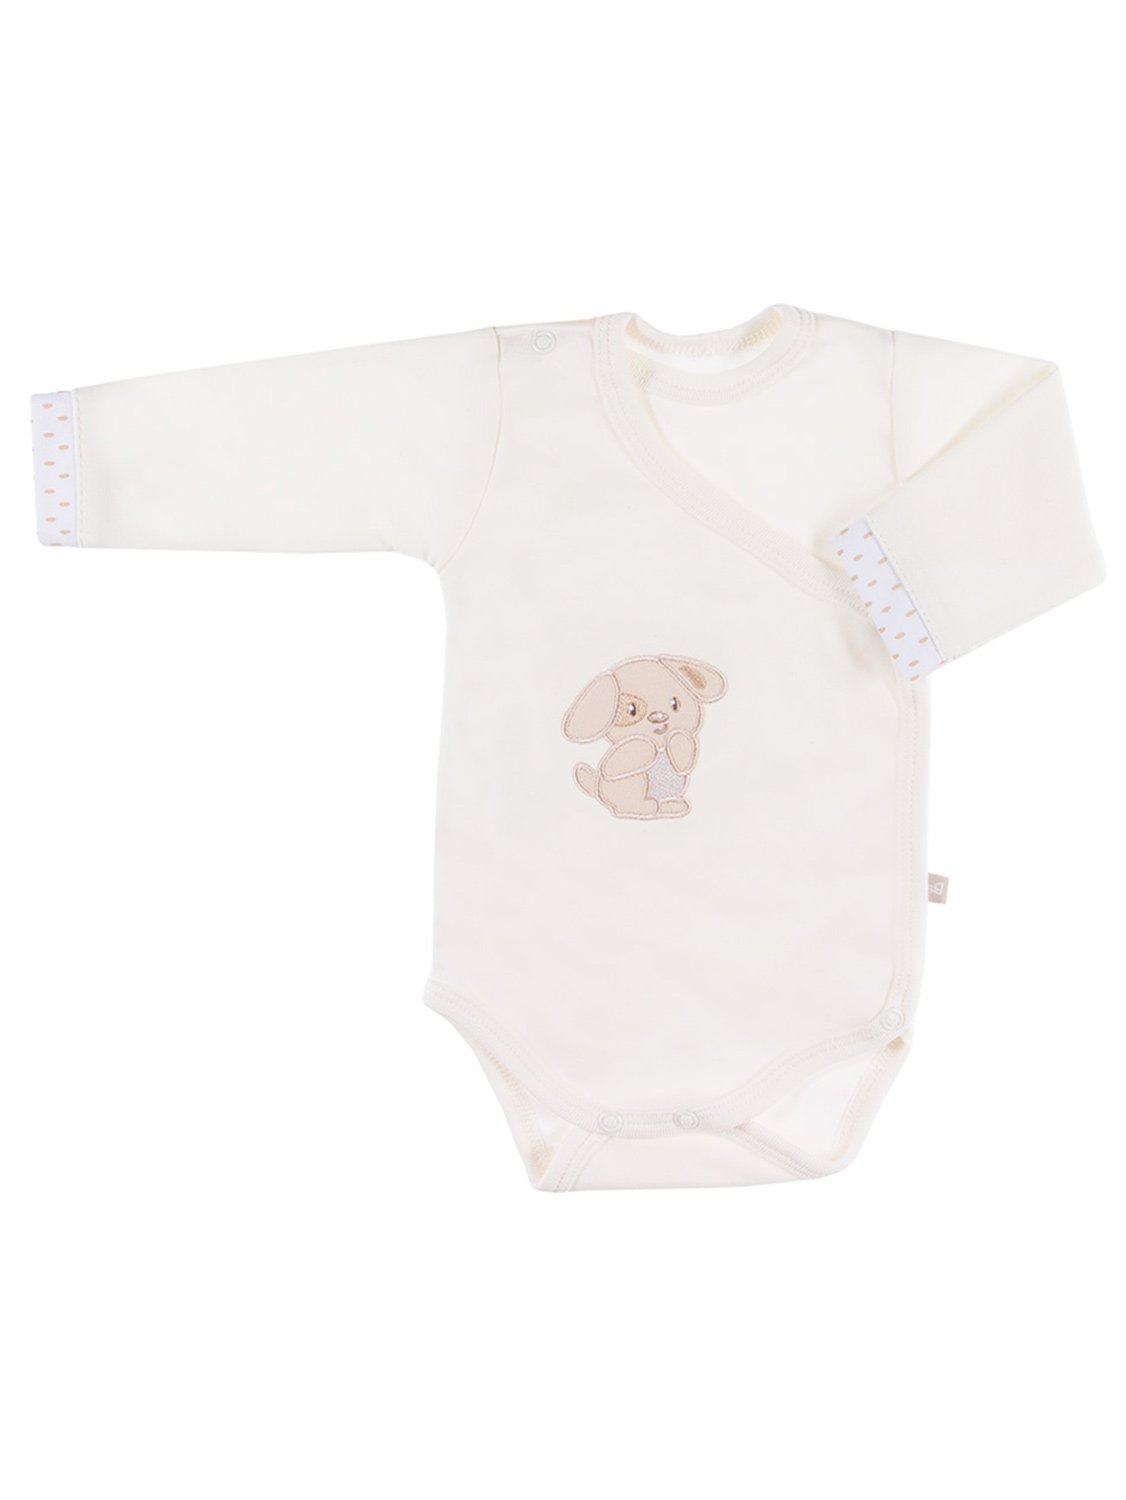 Early Baby Bodysuit, Embroidered Puppy Design - Cream Bodysuit / Vest EEVI 